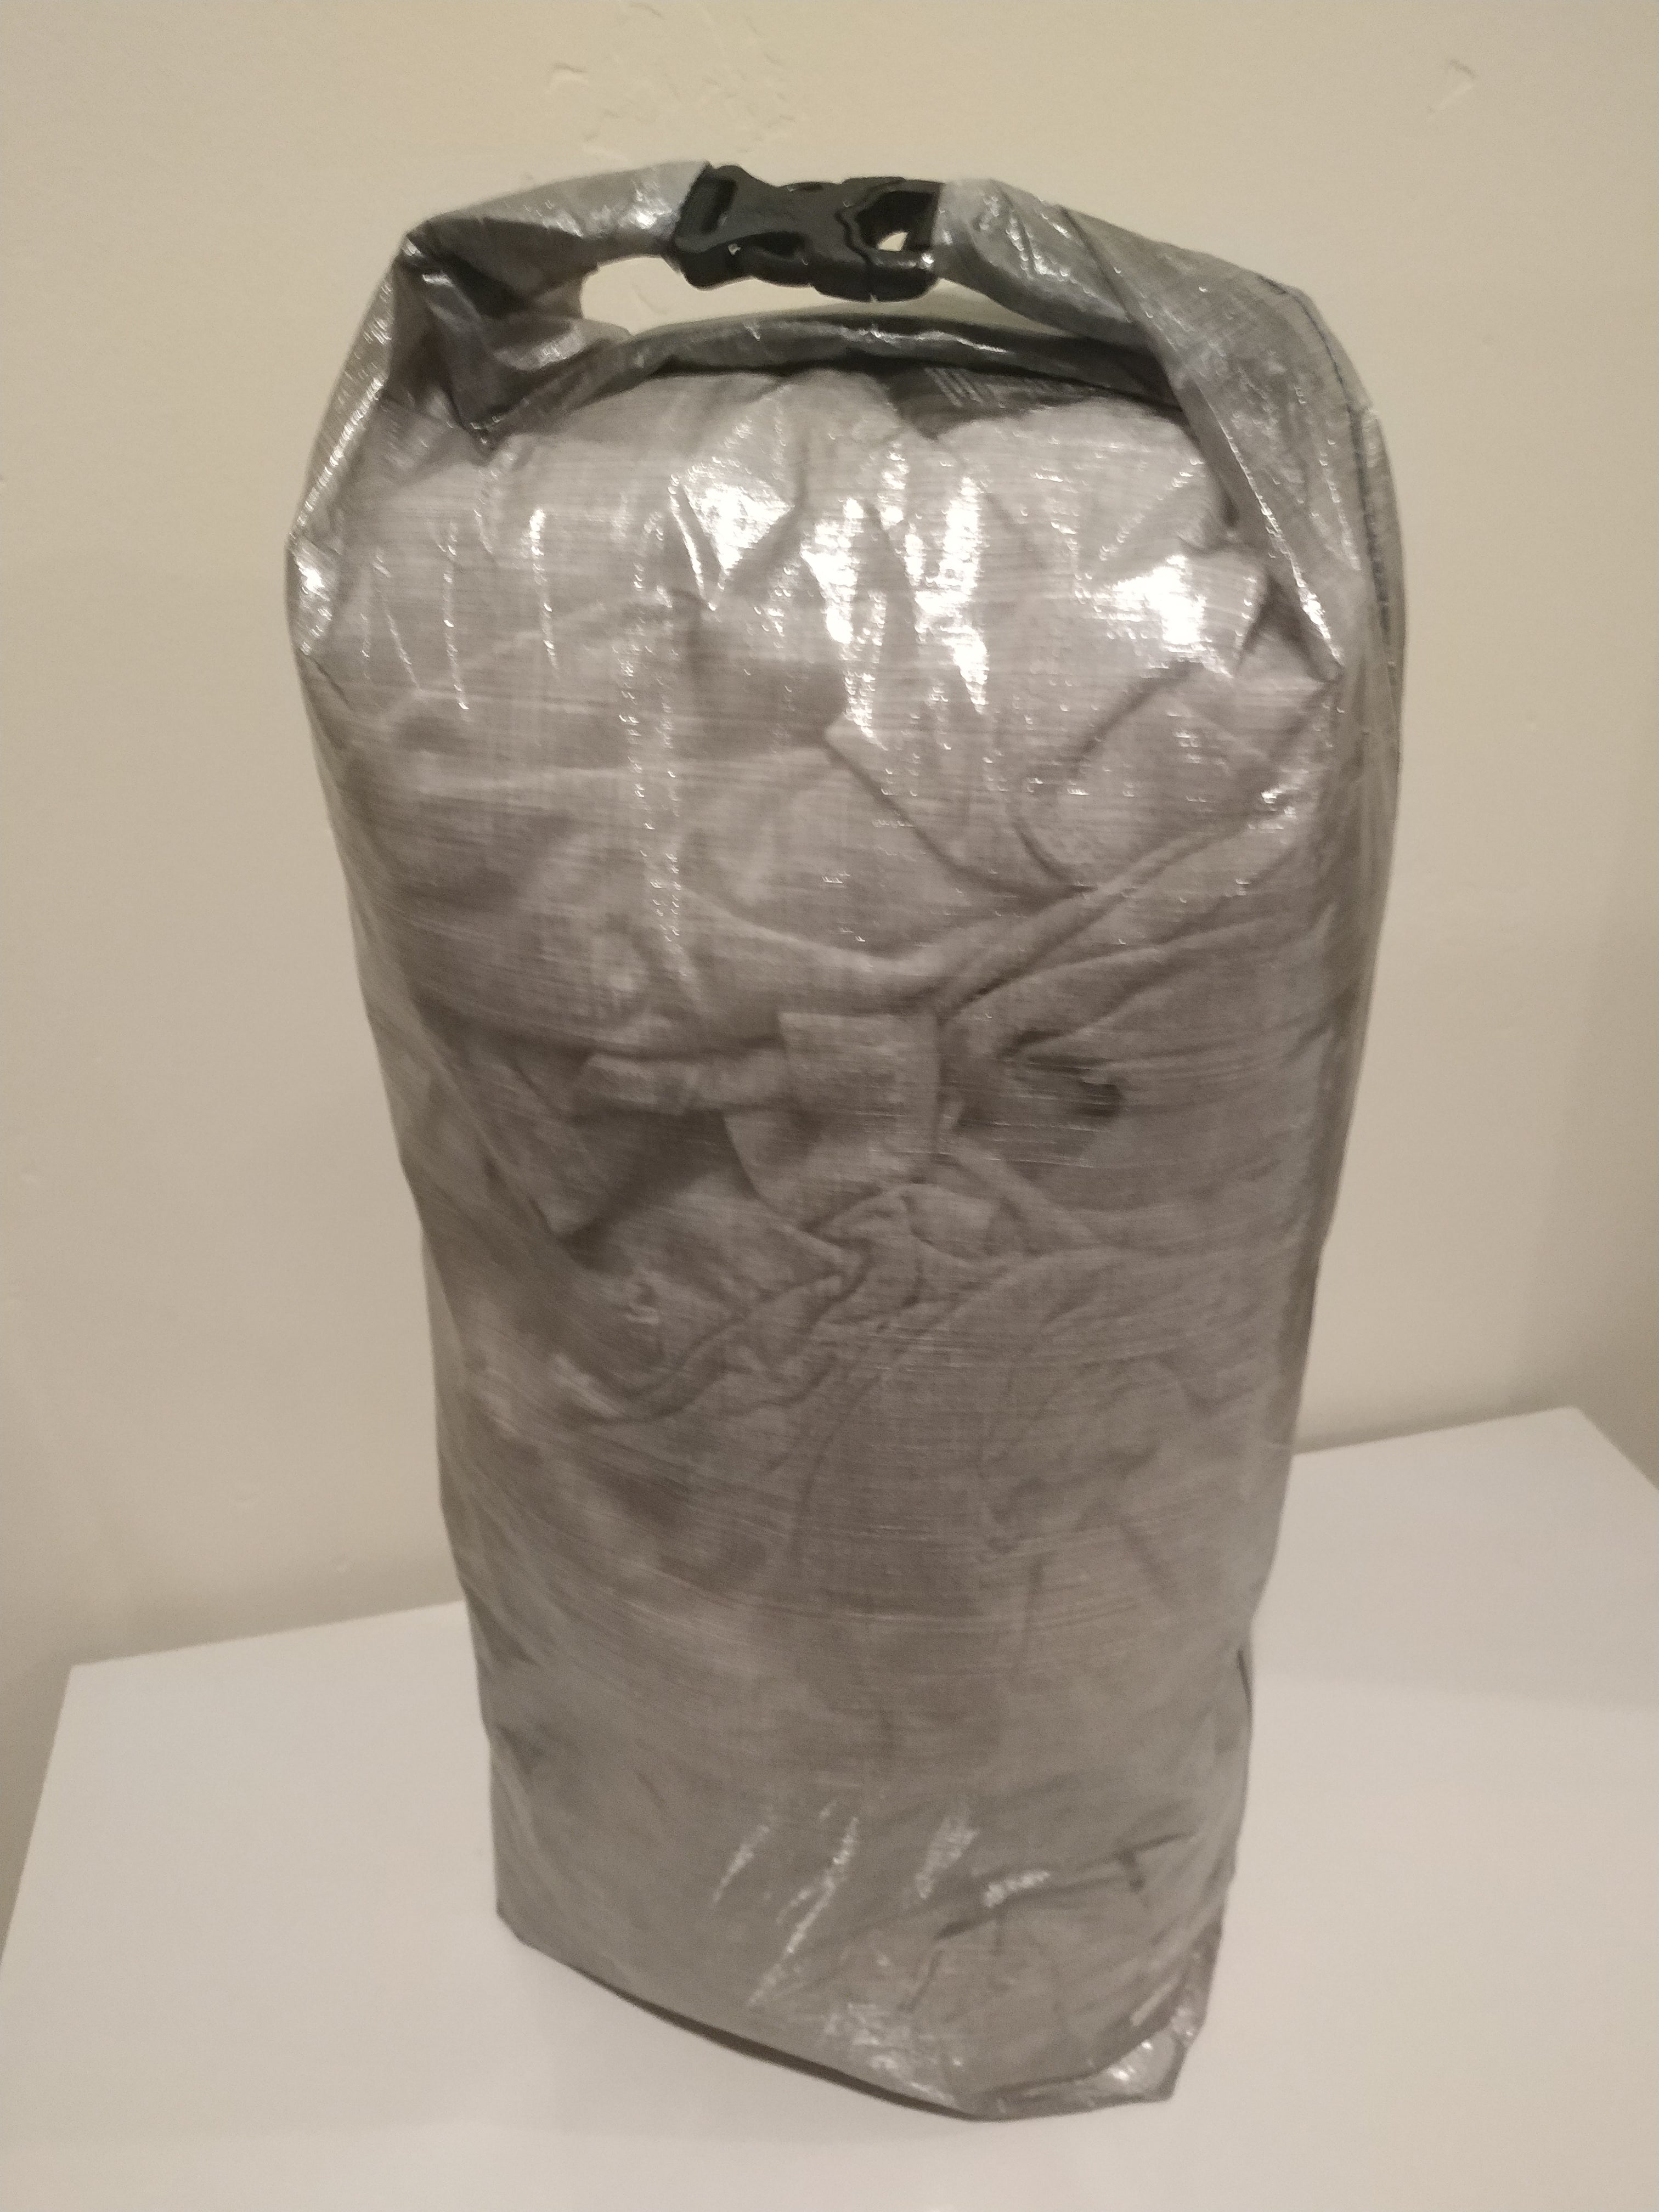 Ultralight Medium Dry Bag - Solid Color Dyneema